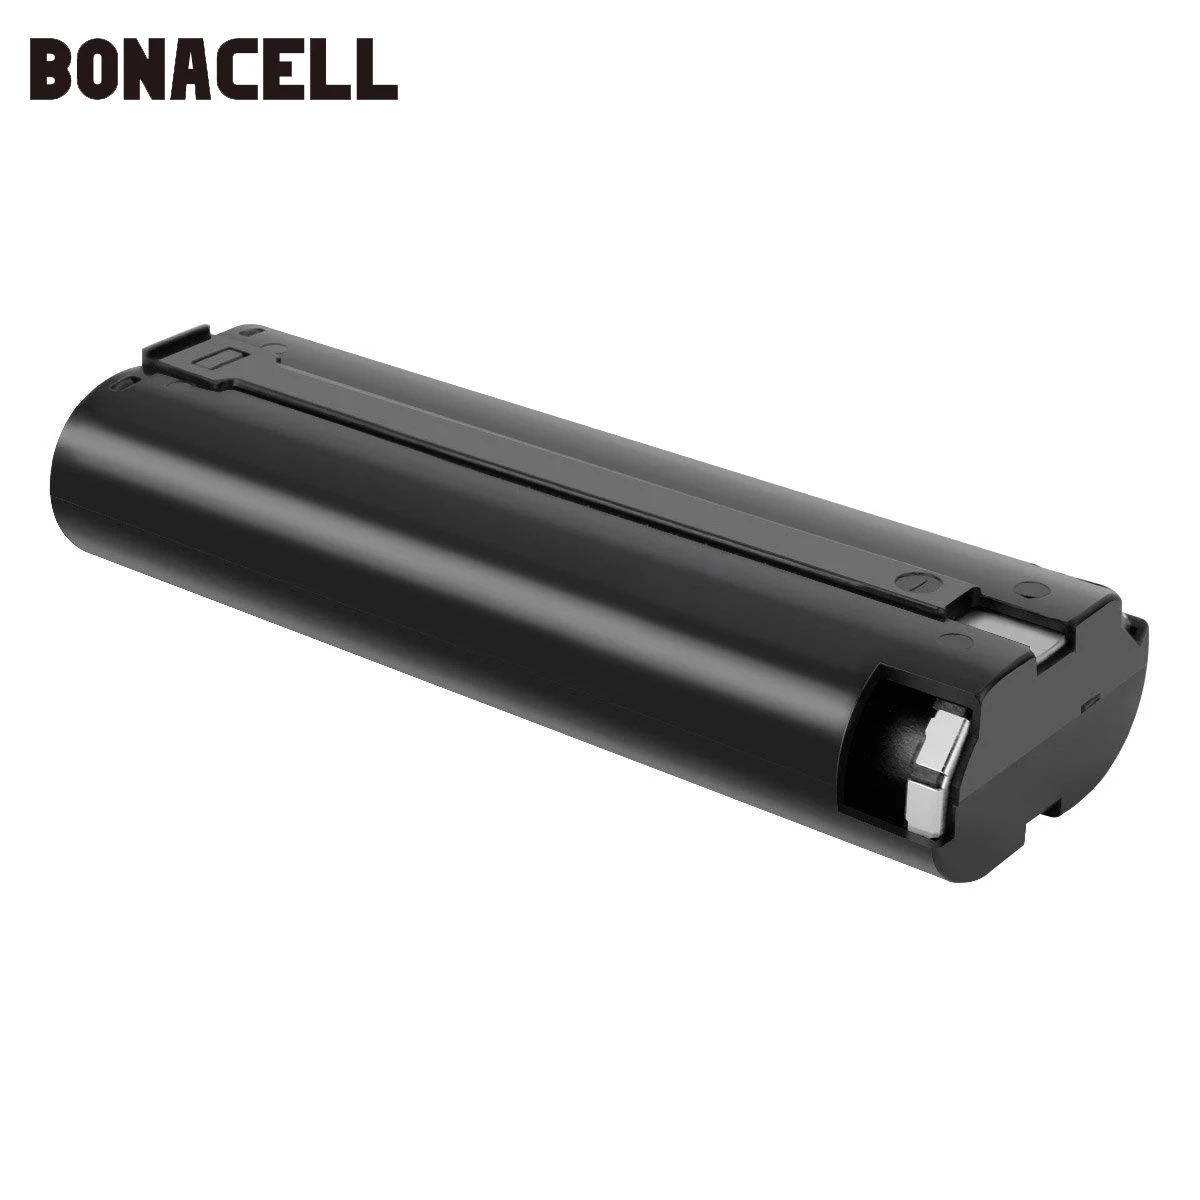 Bonacell 7,2 V 2.1Ah B7000 аккумулятор для электроинструмента для MAKITA 7033 7002 7000 632003-2 191679-9 192532-2 Аккумуляторная батарея для дрели L5